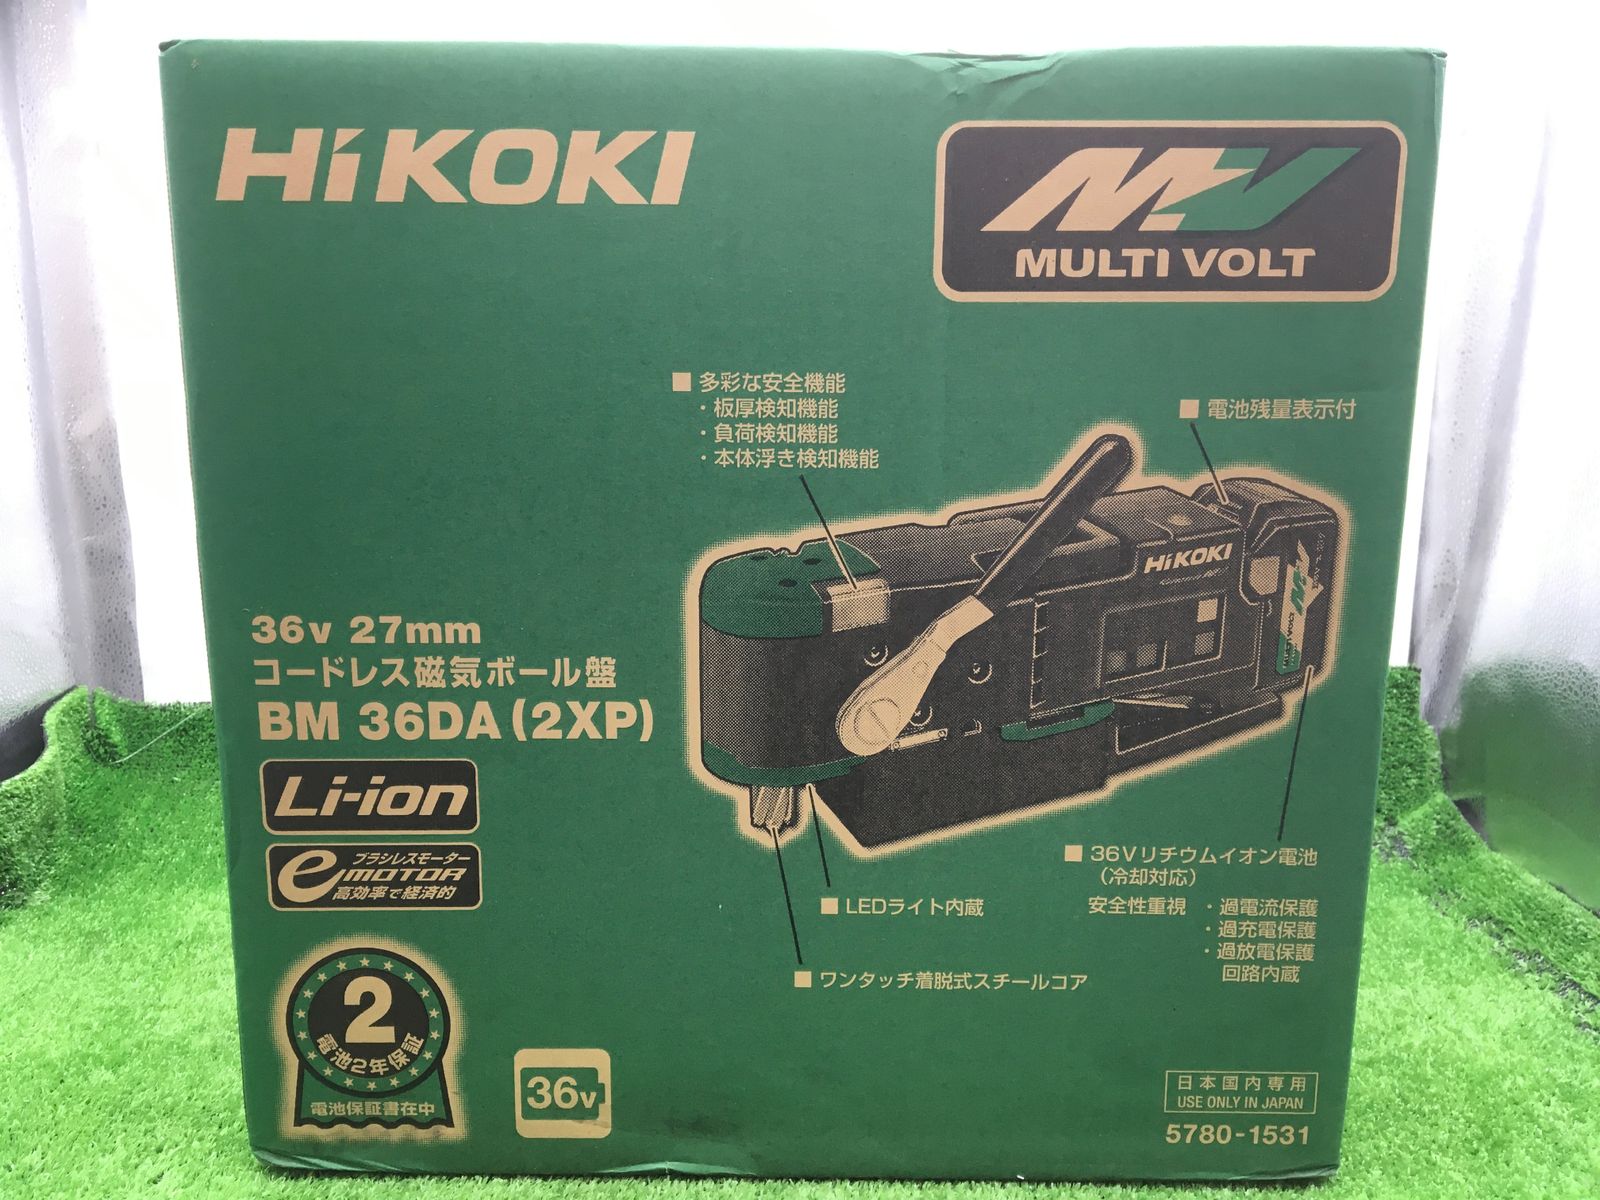 HIKOKI マルチボルト コードレス磁気ボール盤 BM36DA(2XP) - 10